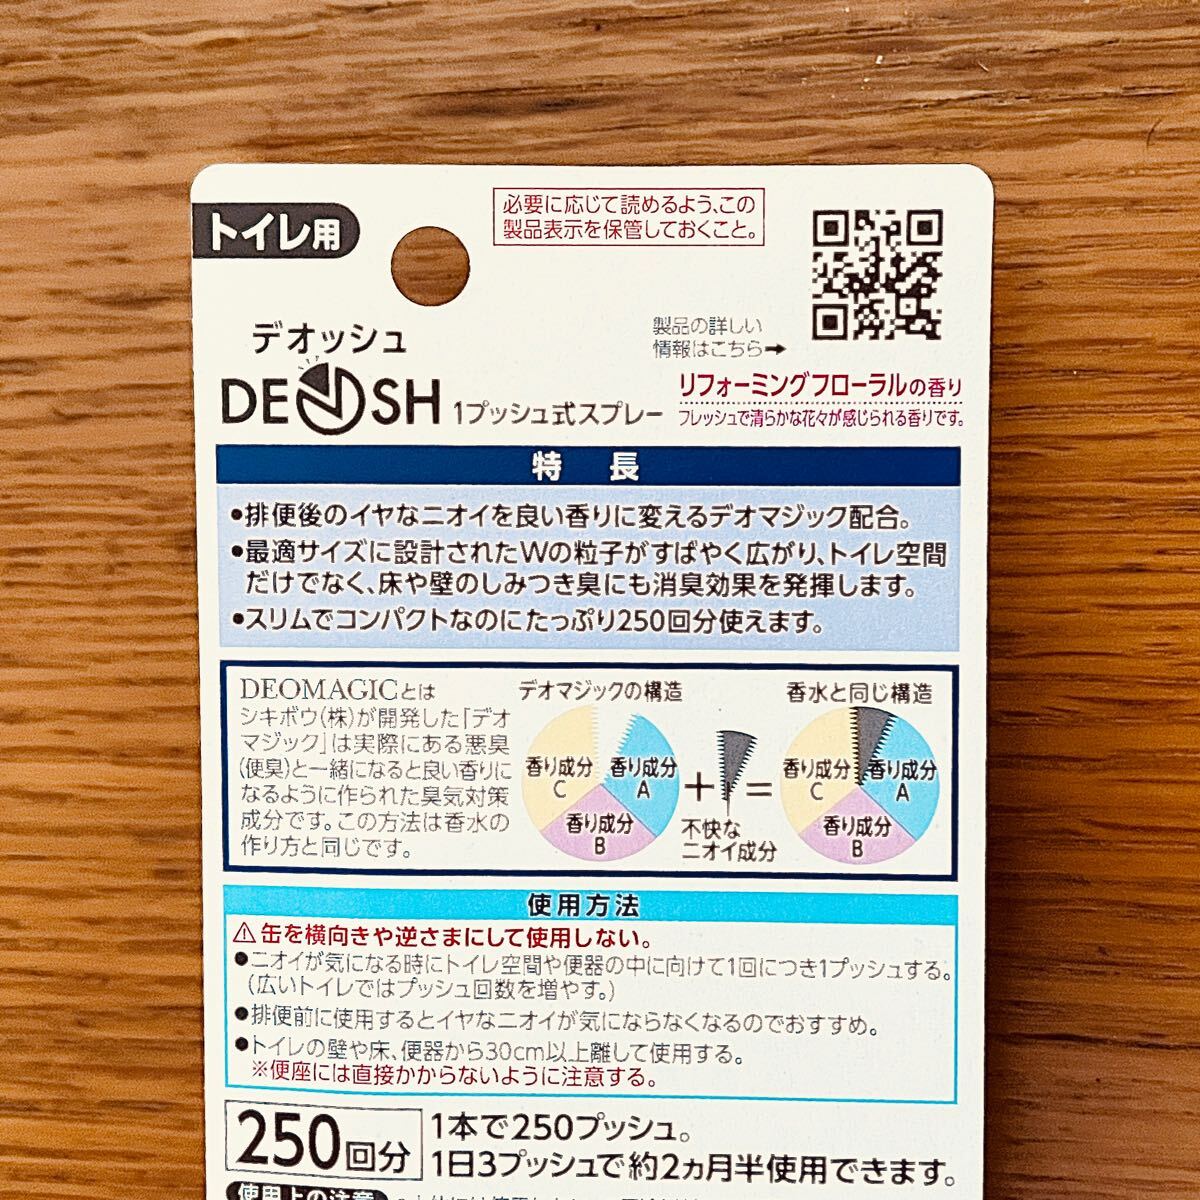 DEOSH デオッシュ 1プッシュ式 スプレー フローラルの香り 7本 トイレ用